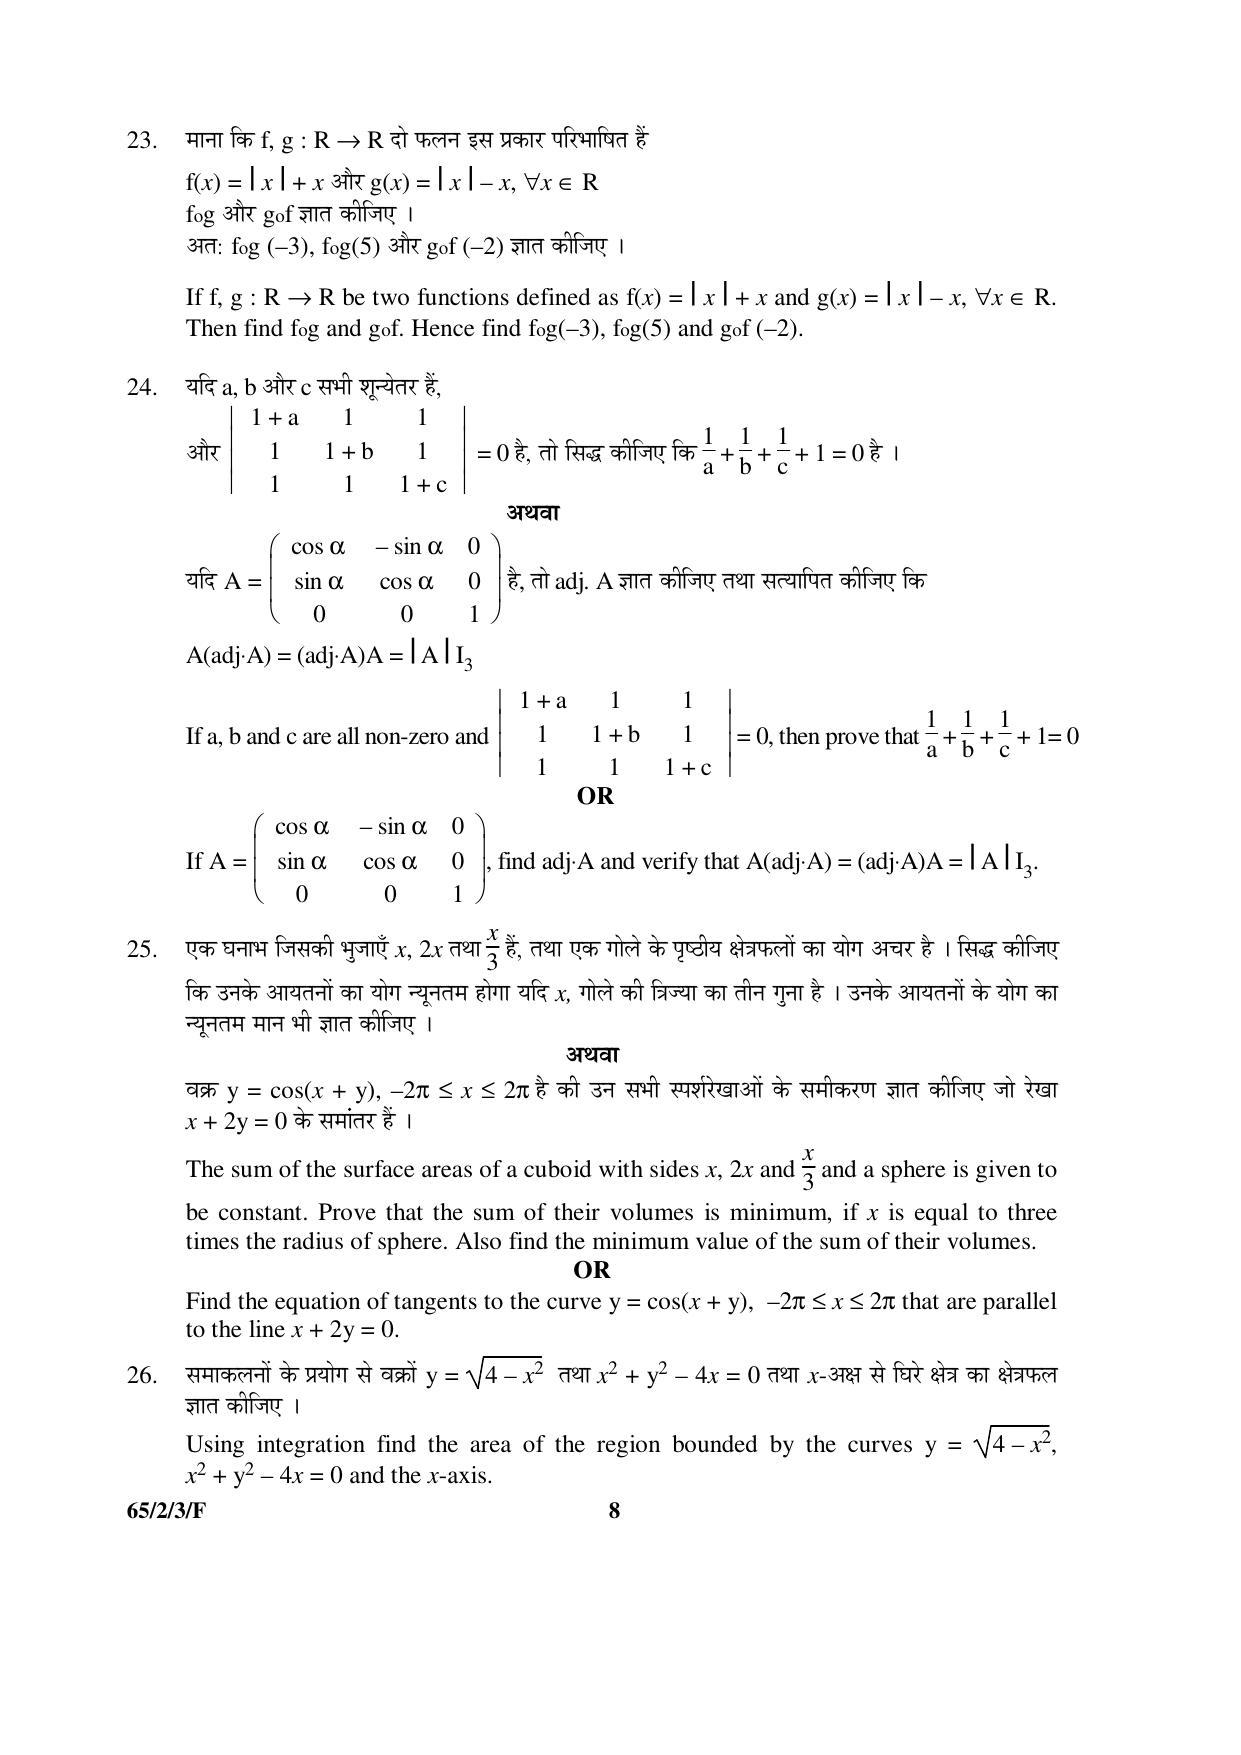 CBSE Class 12 65-2-3-F _Mathematics_ 2016 Question Paper - Page 8